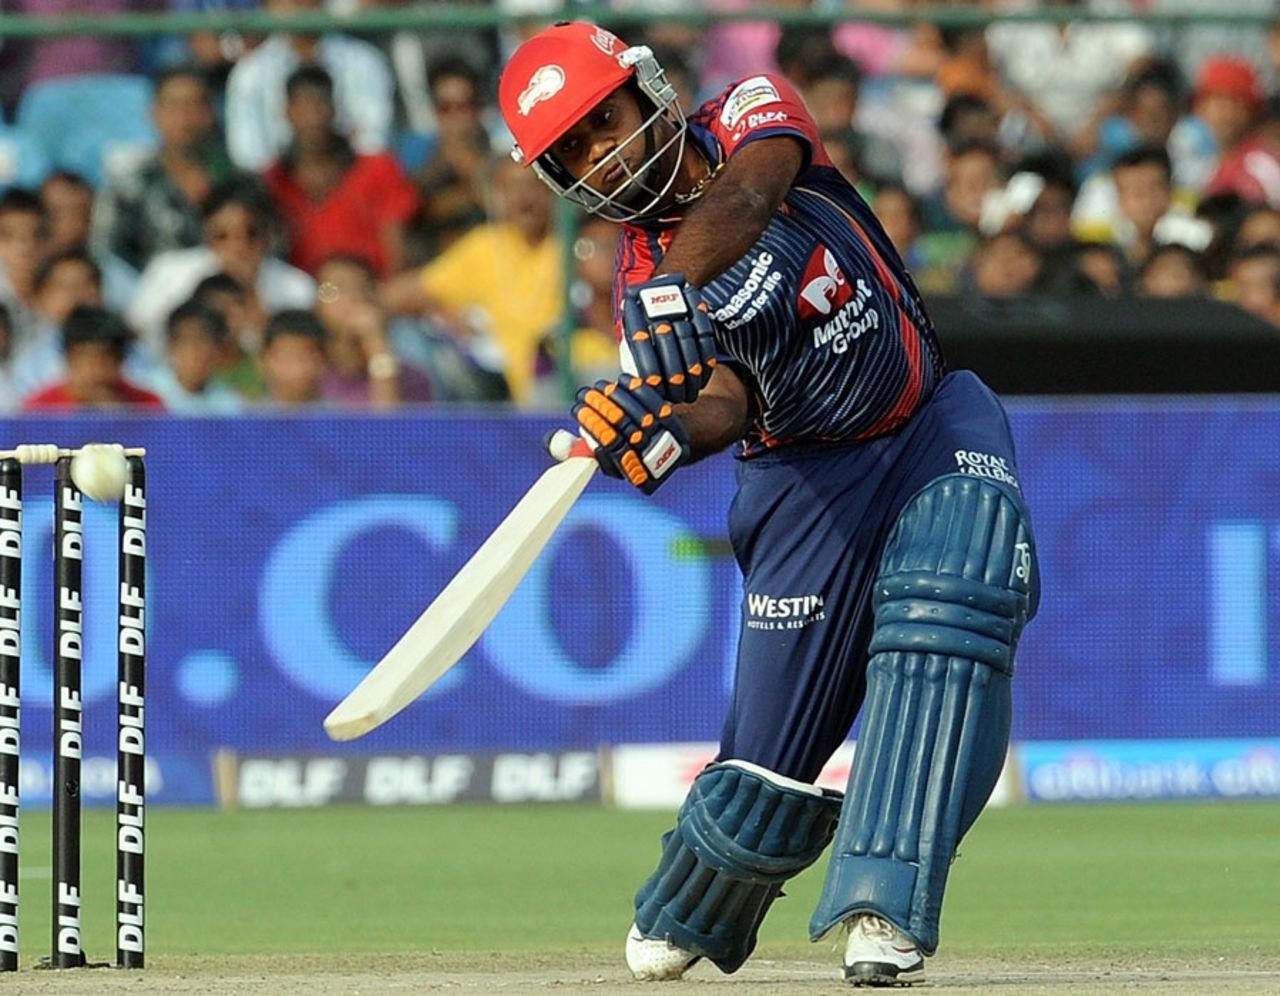 Venugopal Rao hit four boundaries and four sixes in his 60, Rajasthan Royals v Delhi Daredevils, IPL 2011, Jaipur, April 12, 2011